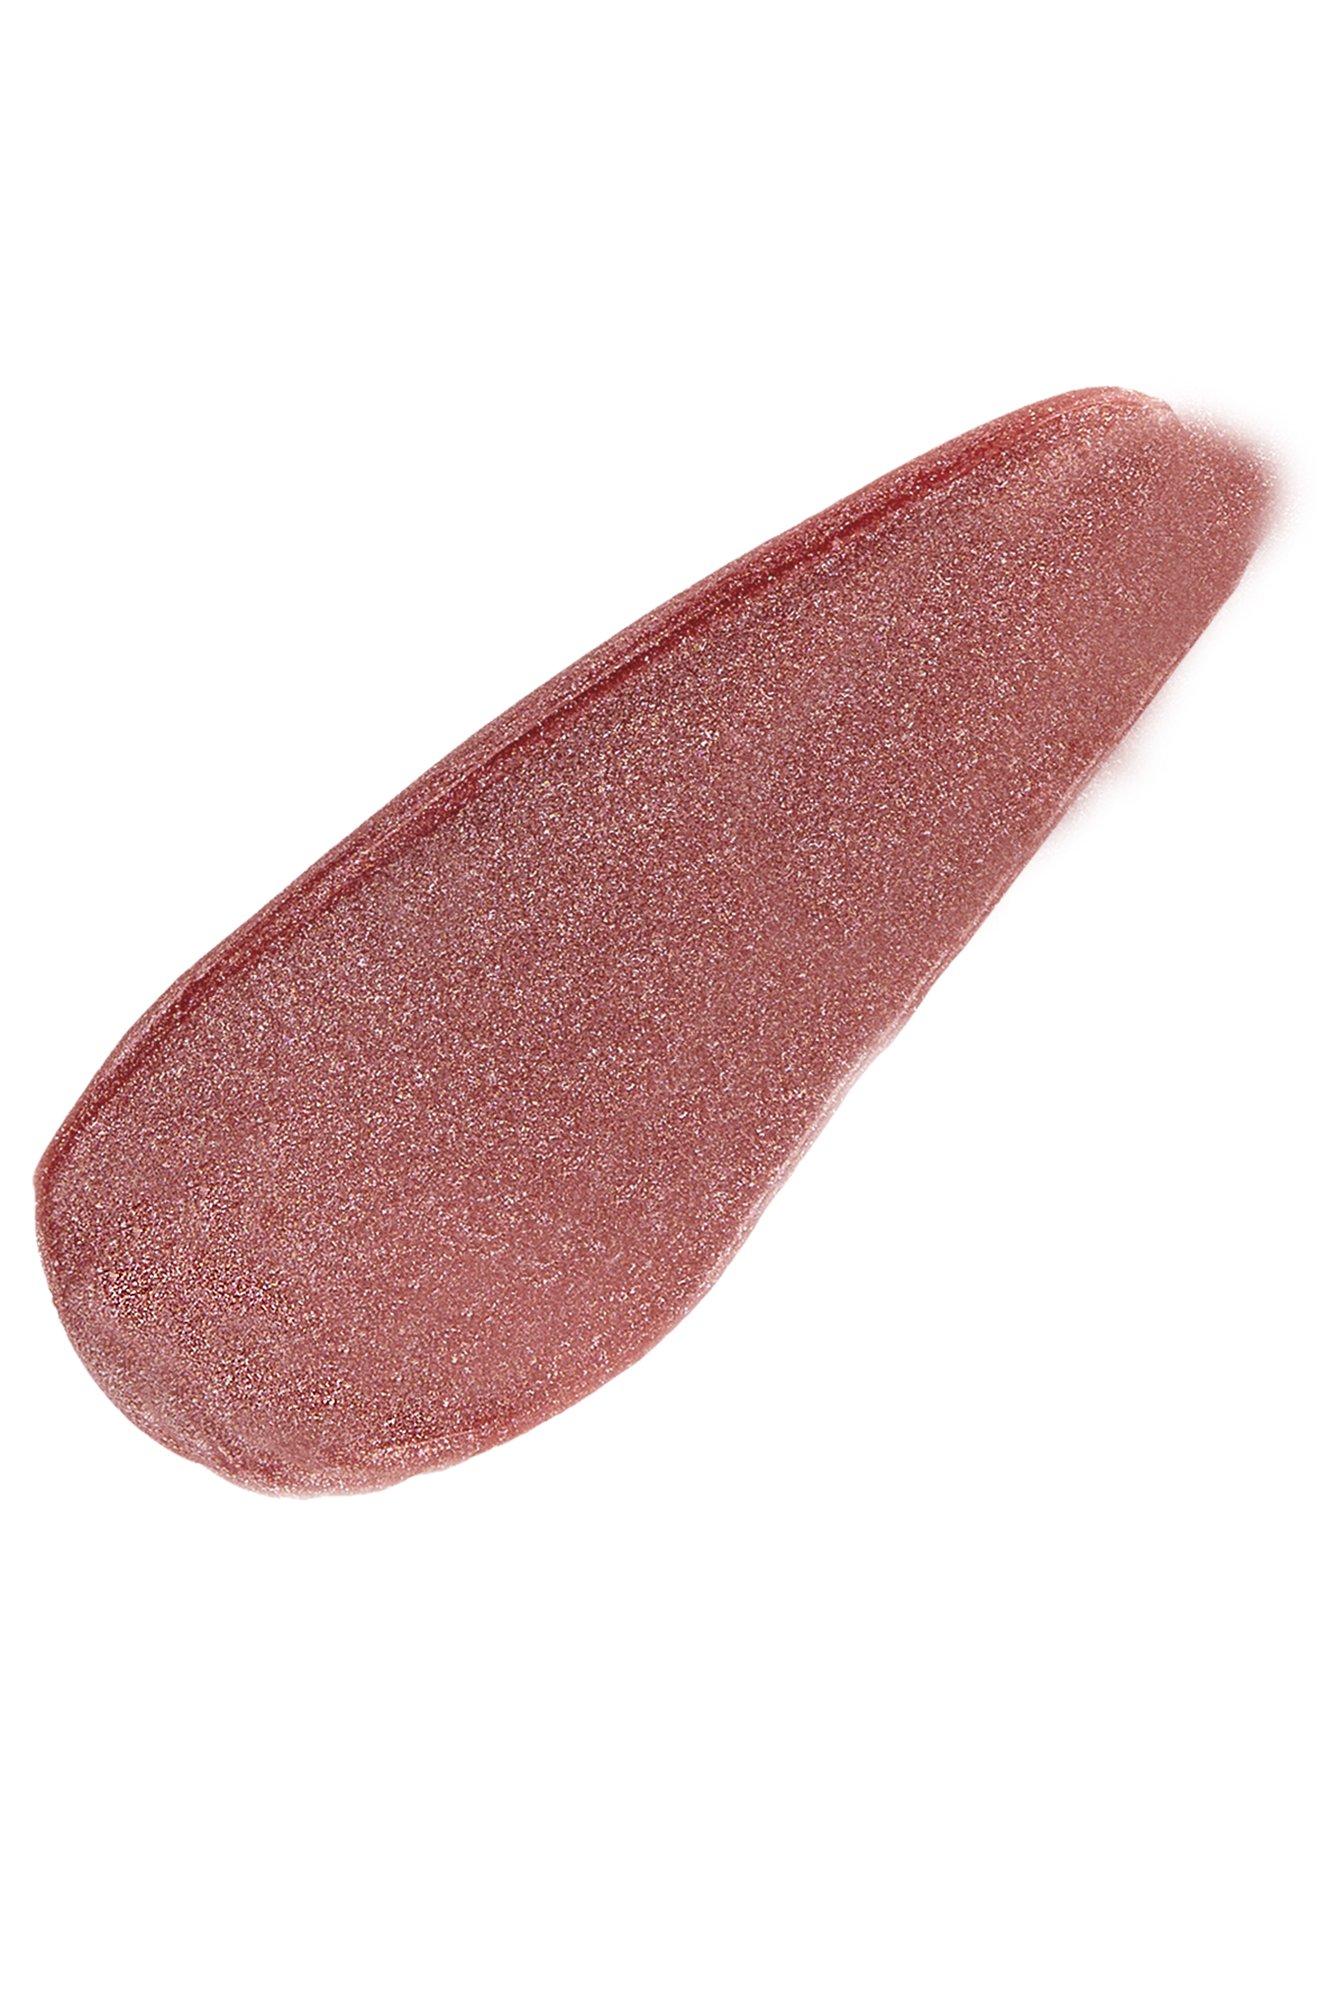 Блеск для губ Lipgloss Colourstudio т.403 4,5 мл LAMEL Professional